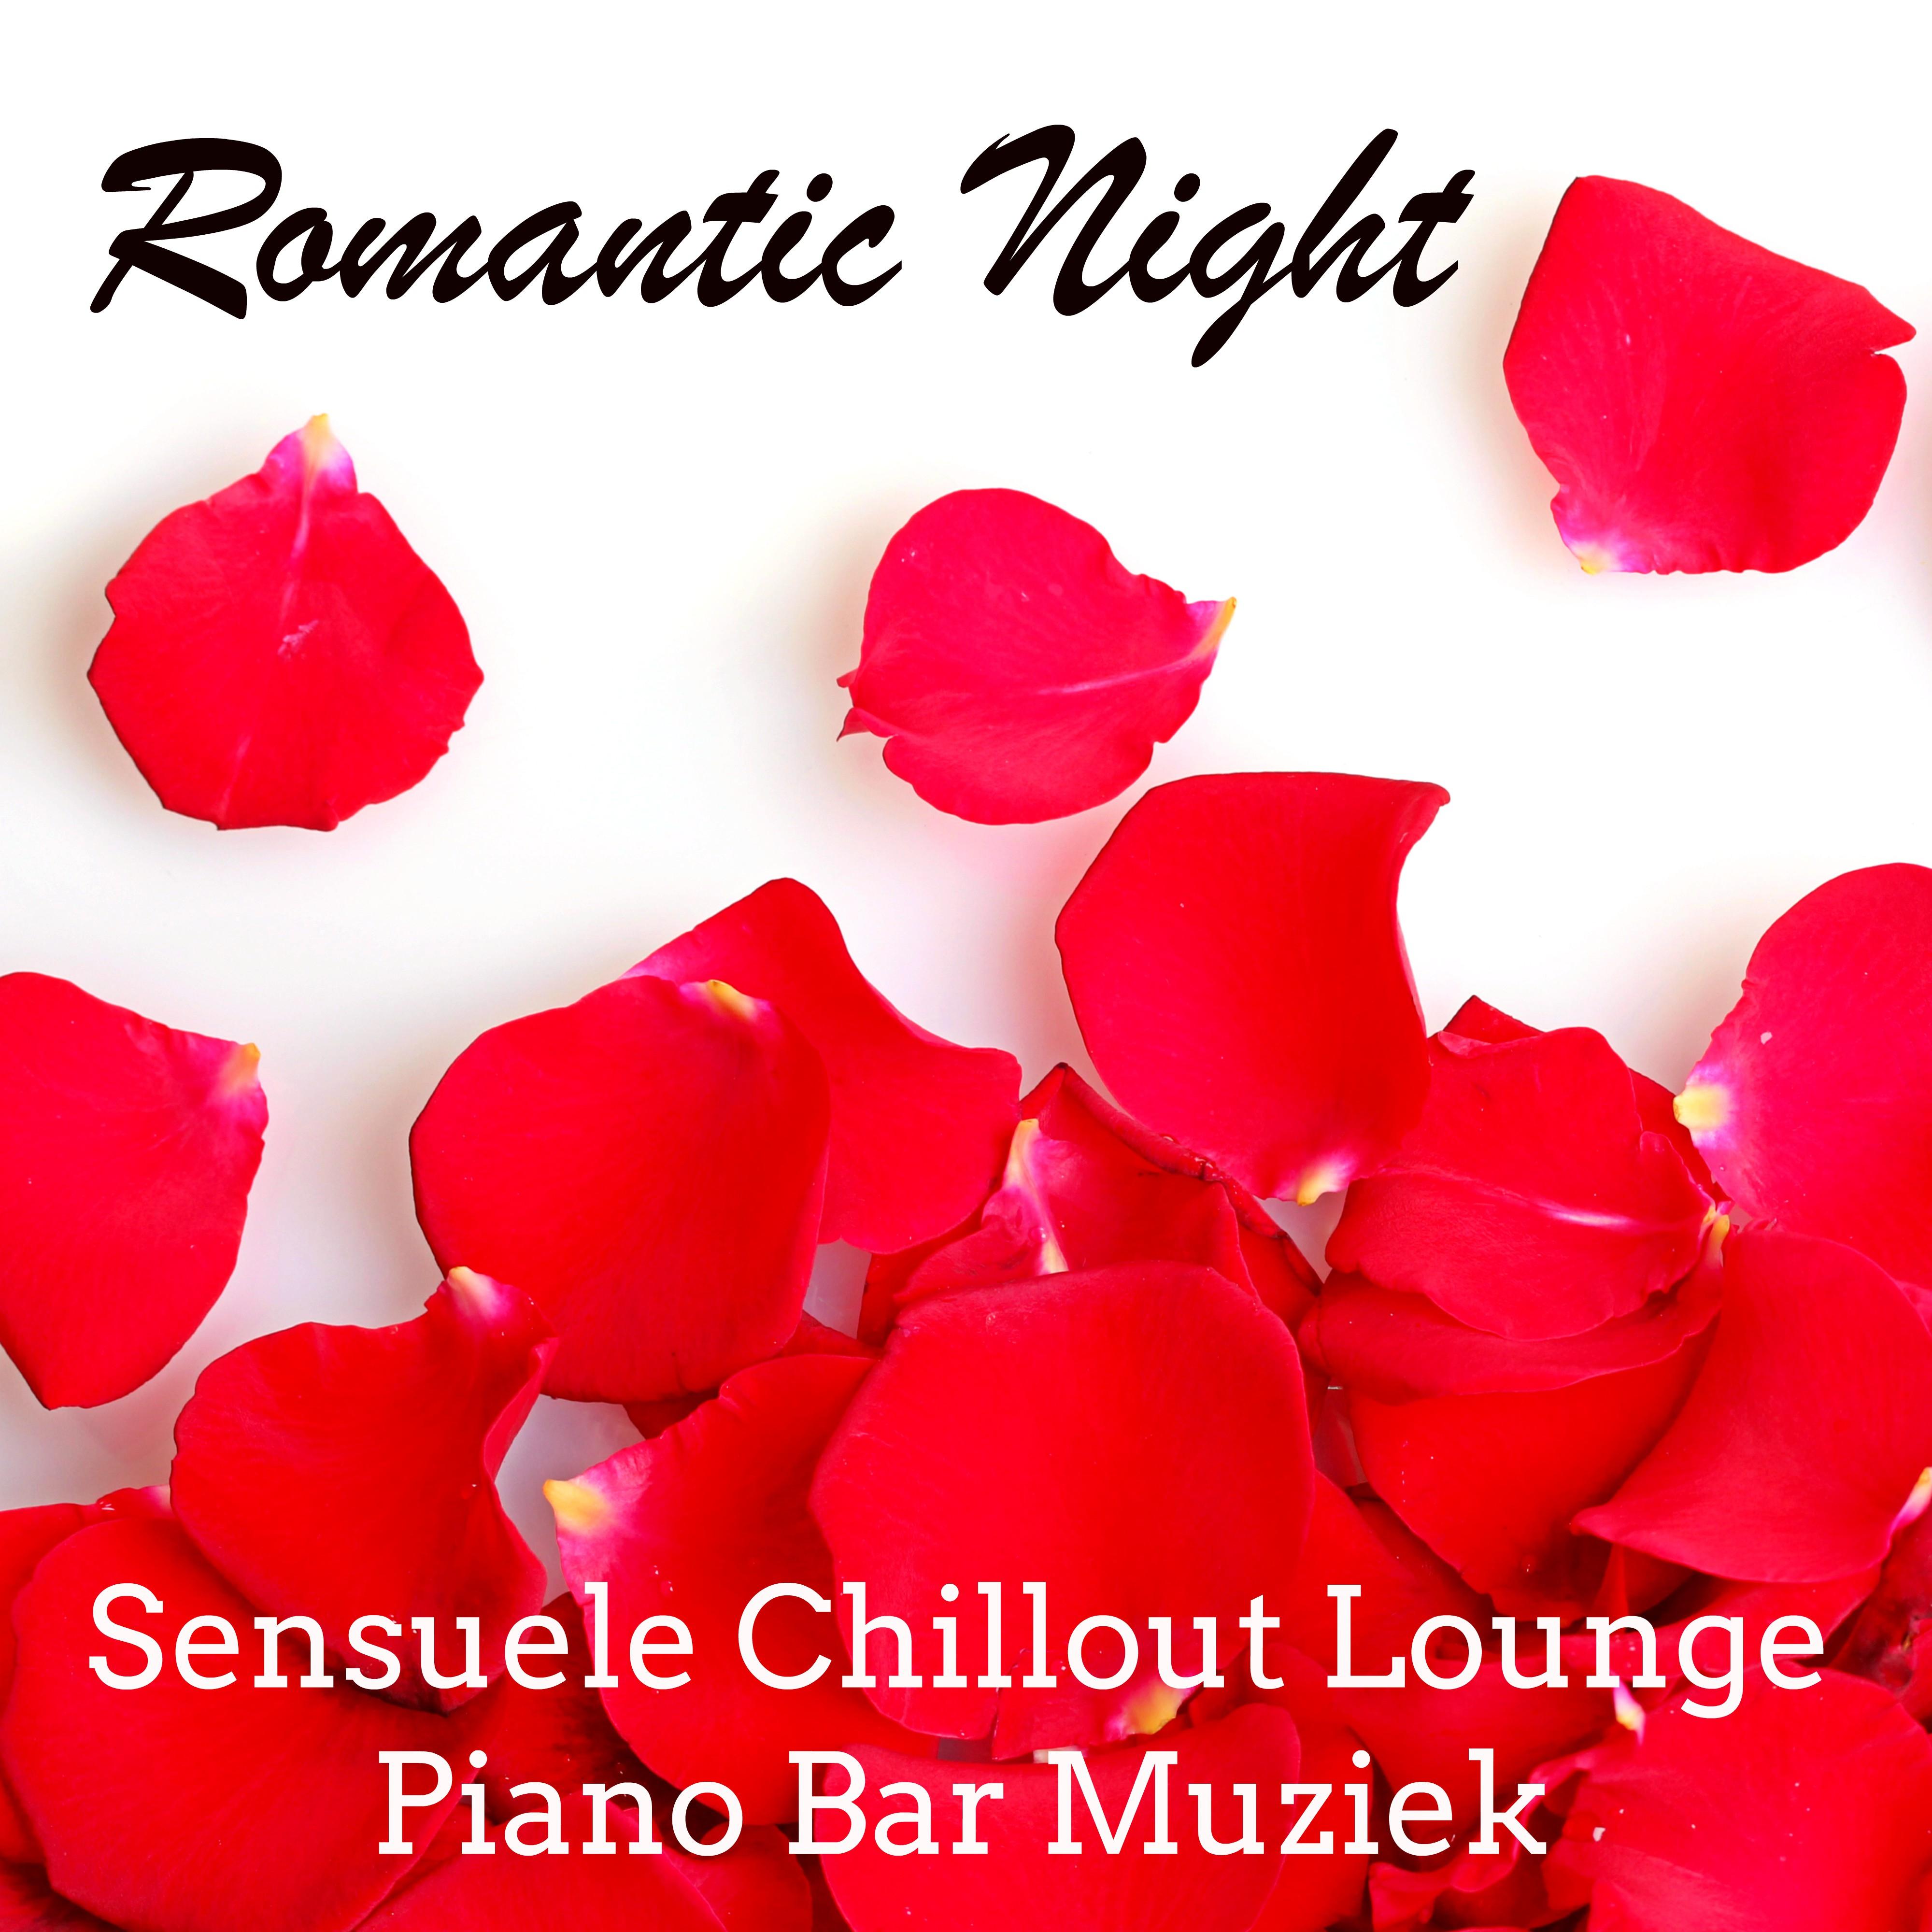 Romantic Night - Sensuele Chillout Lounge Piano Bar Muziek voor Romantisch Uitje